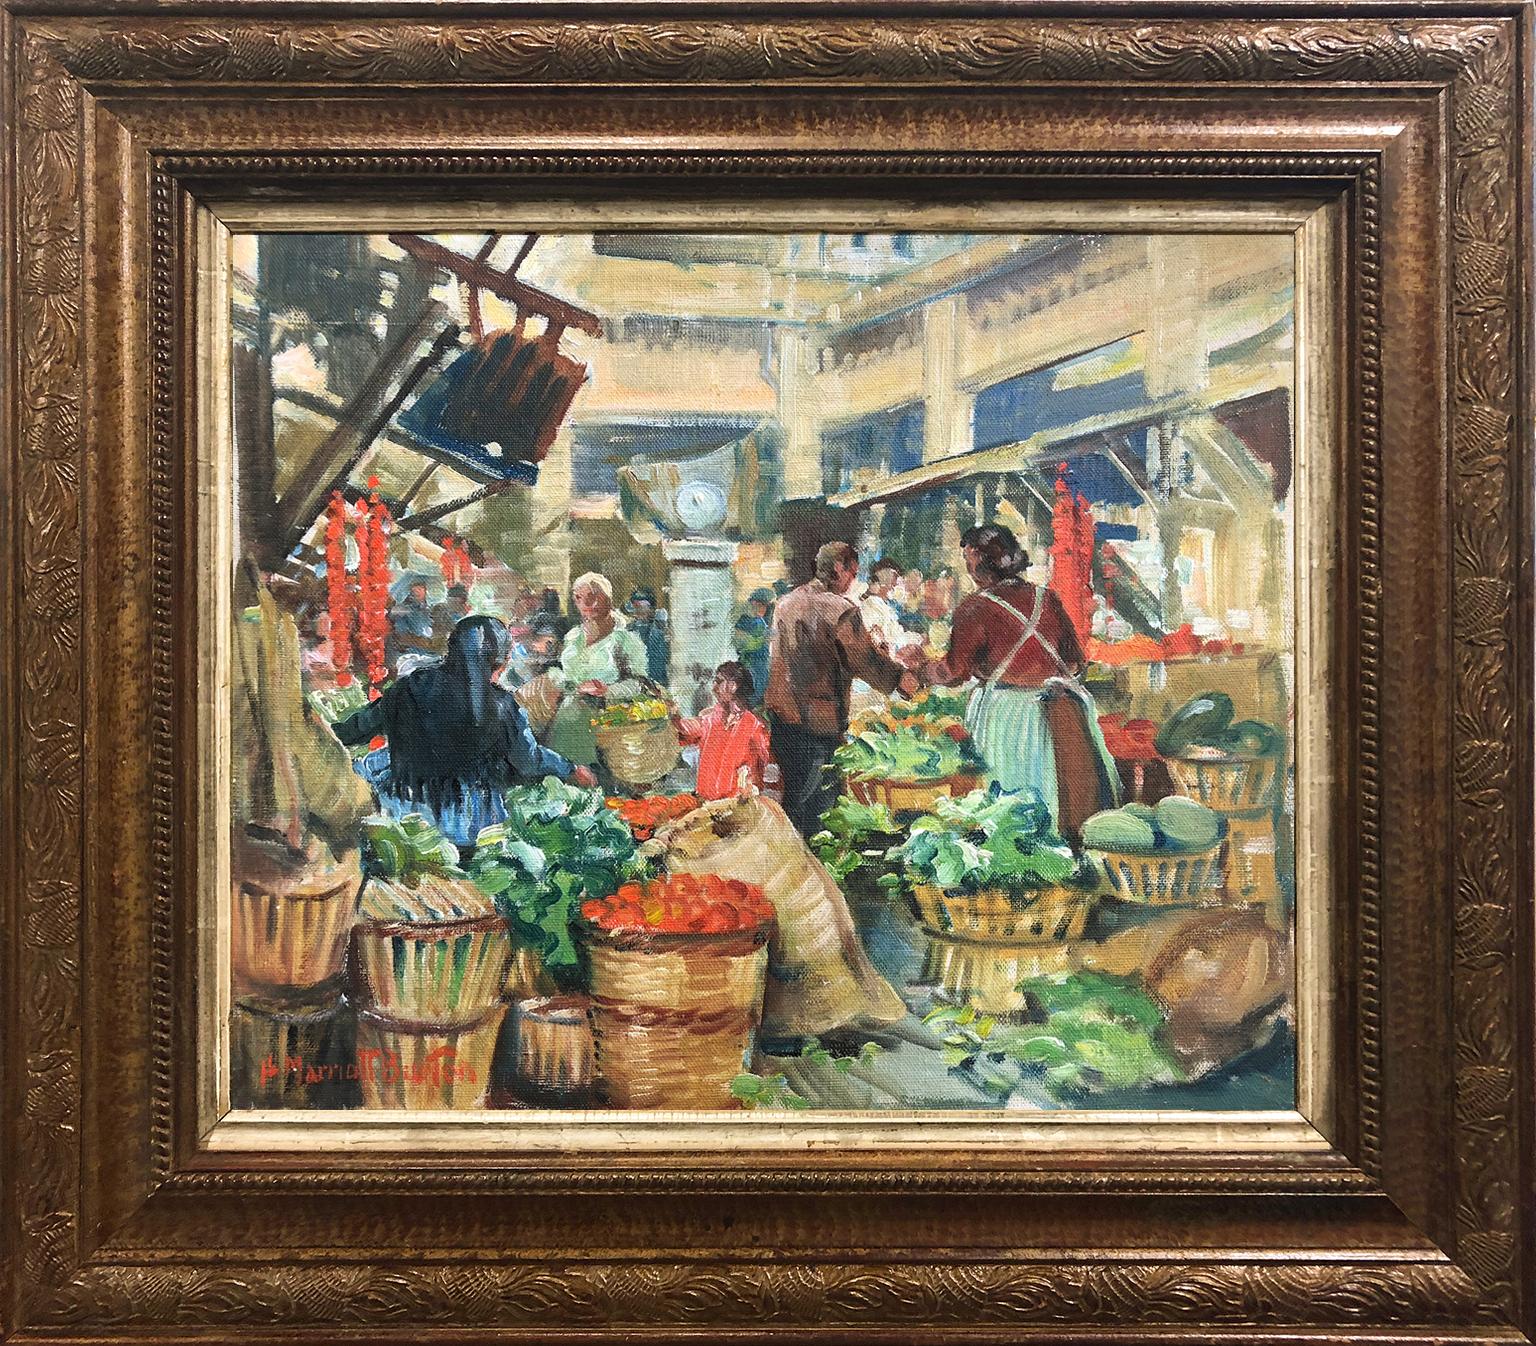 Market Scene - Mercado de Santa Catalina, Palma, Spain (December 1957) - Painting by Harry Marriott-Burton